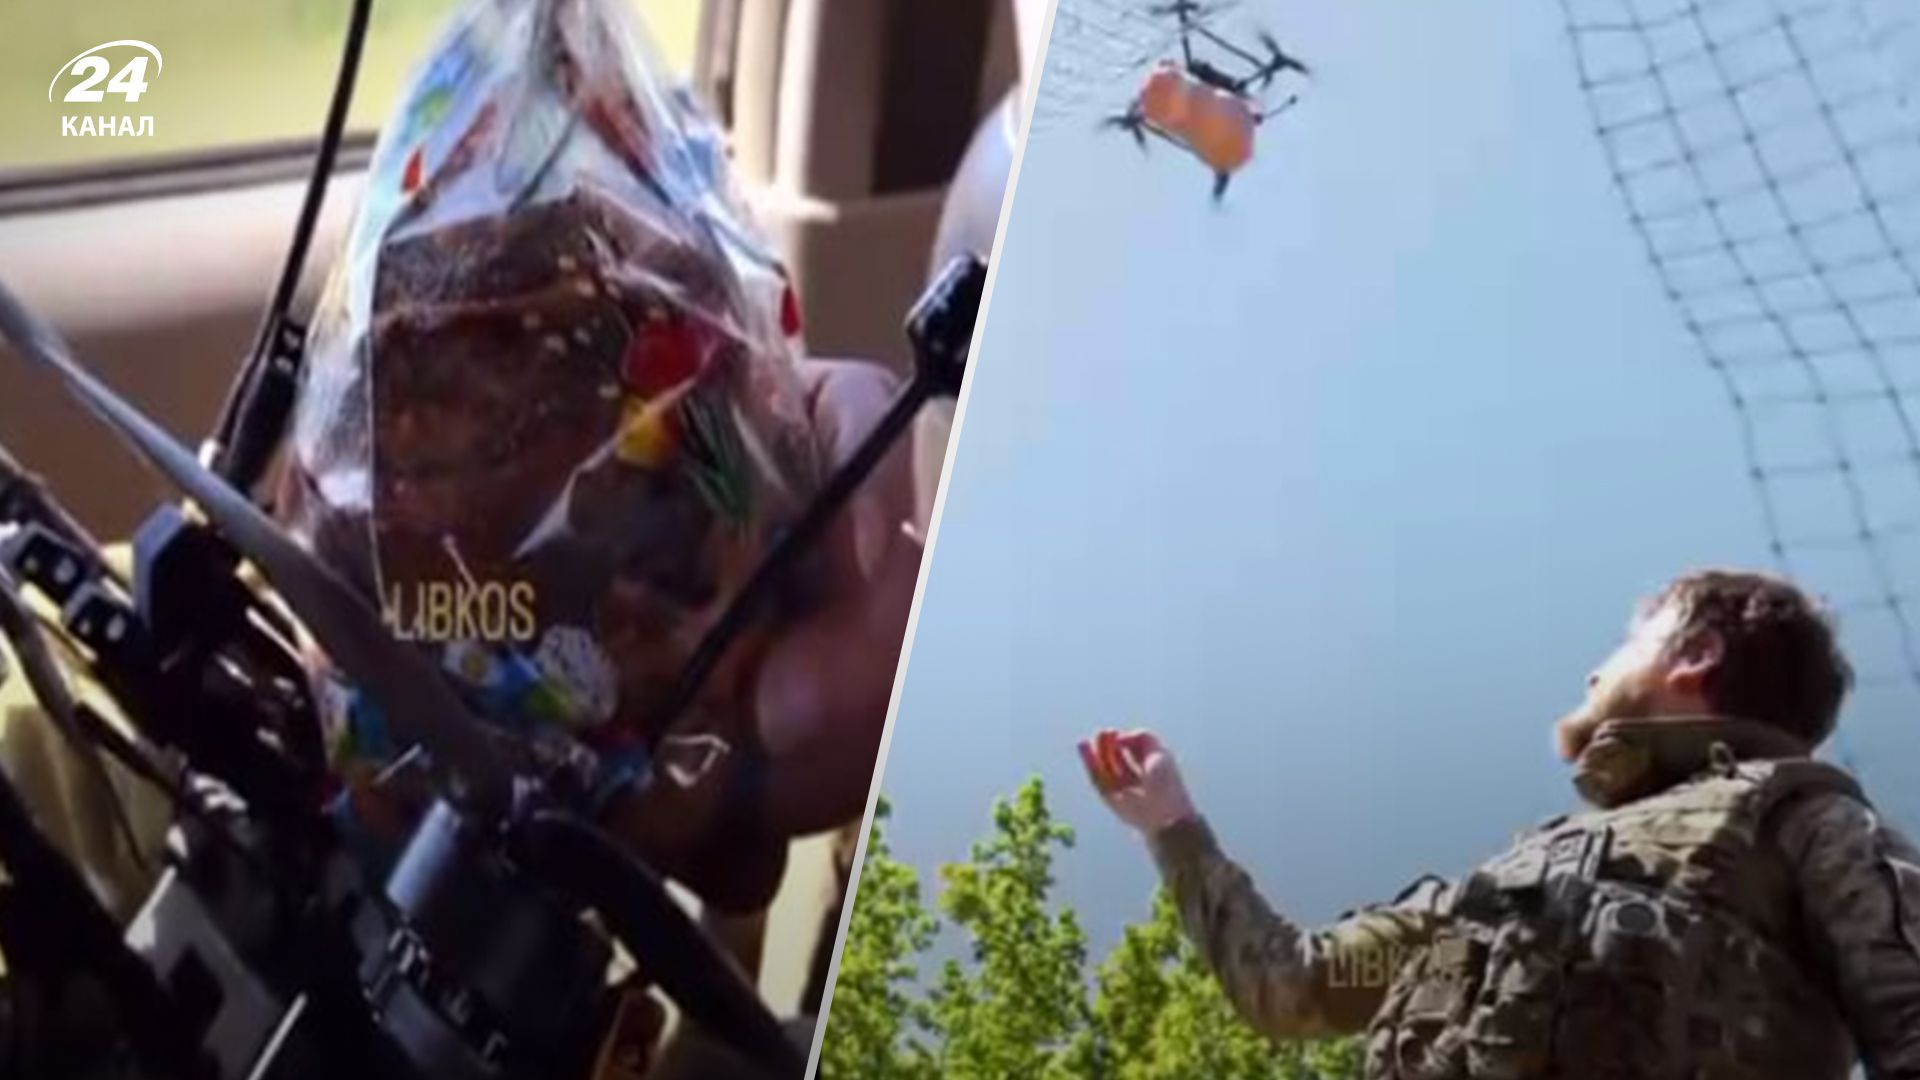 В Крынки на Пасху отправили бойцам куличи FPV-дроном - видео - 24 Канал